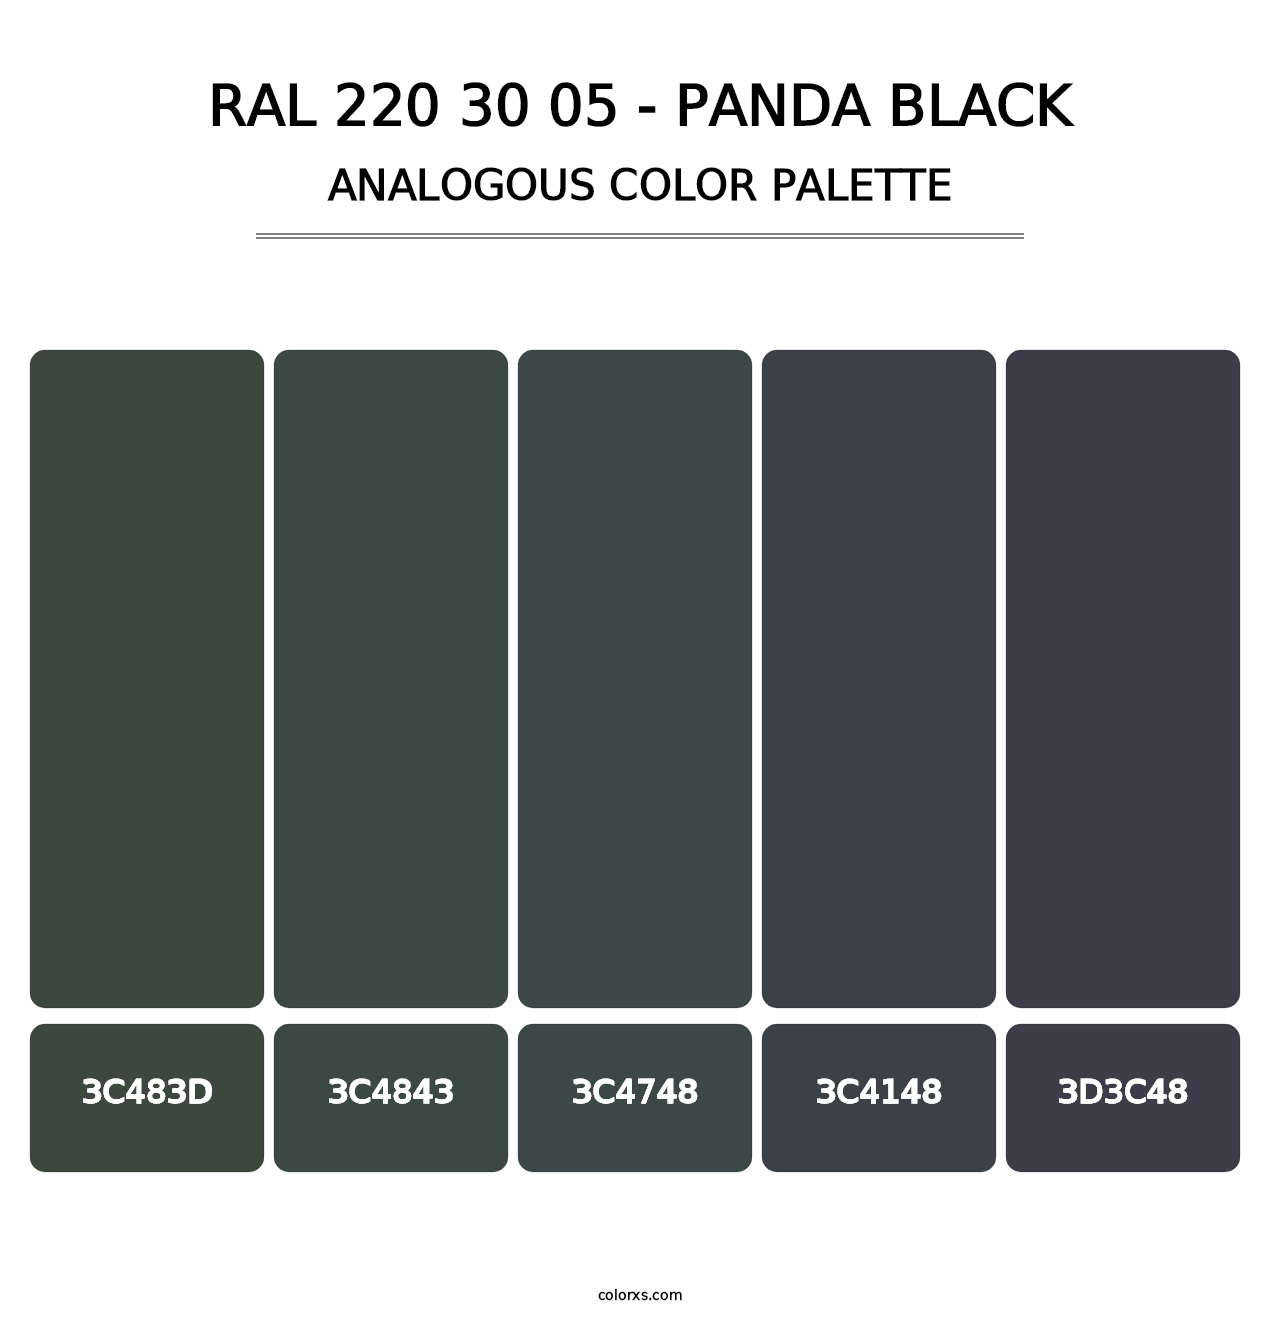 RAL 220 30 05 - Panda Black - Analogous Color Palette